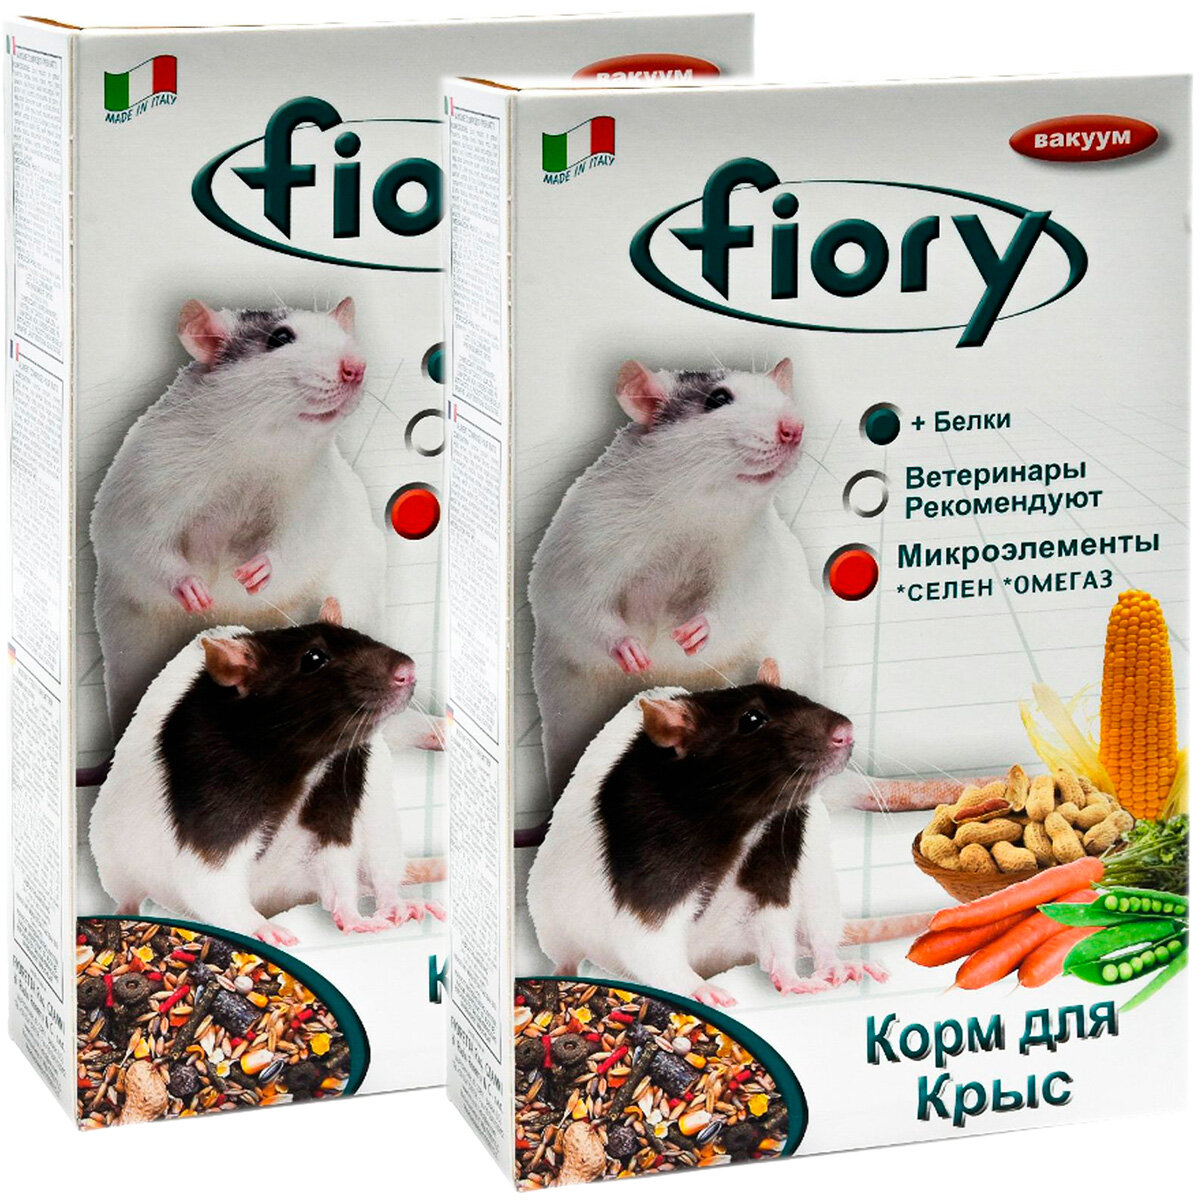 FIORY RATTY – Фиори корм для крыс (850 гр х 2 шт)